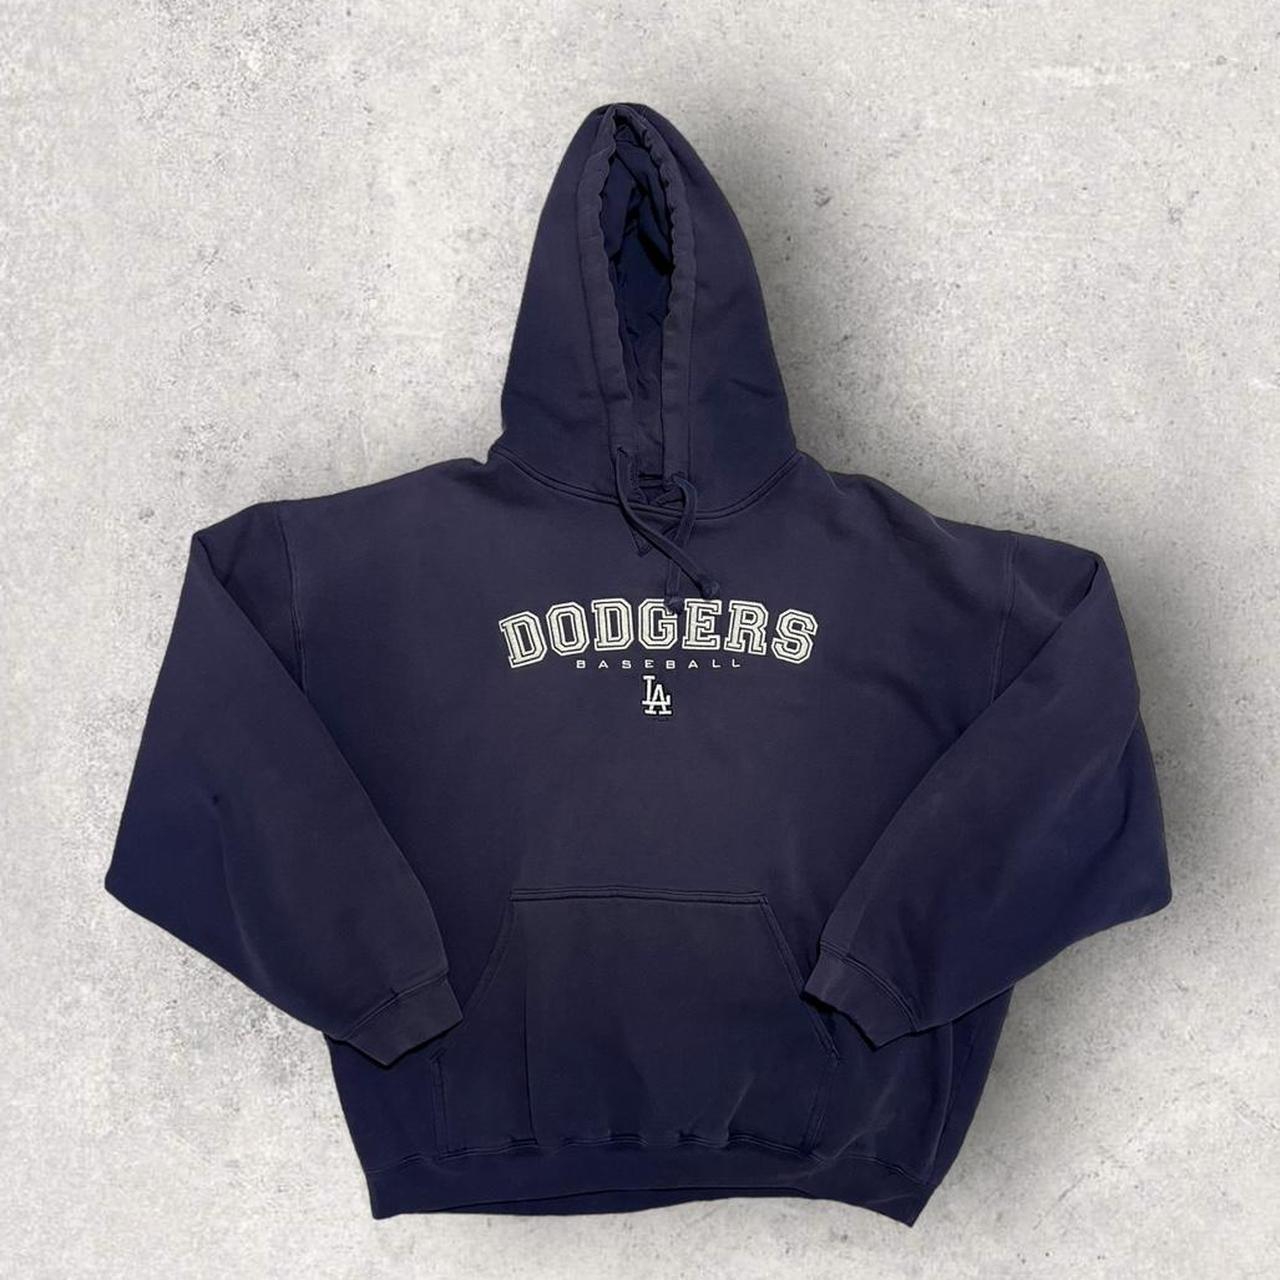 Vintage dodgers hoodie - 2003 Great condition Size... - Depop